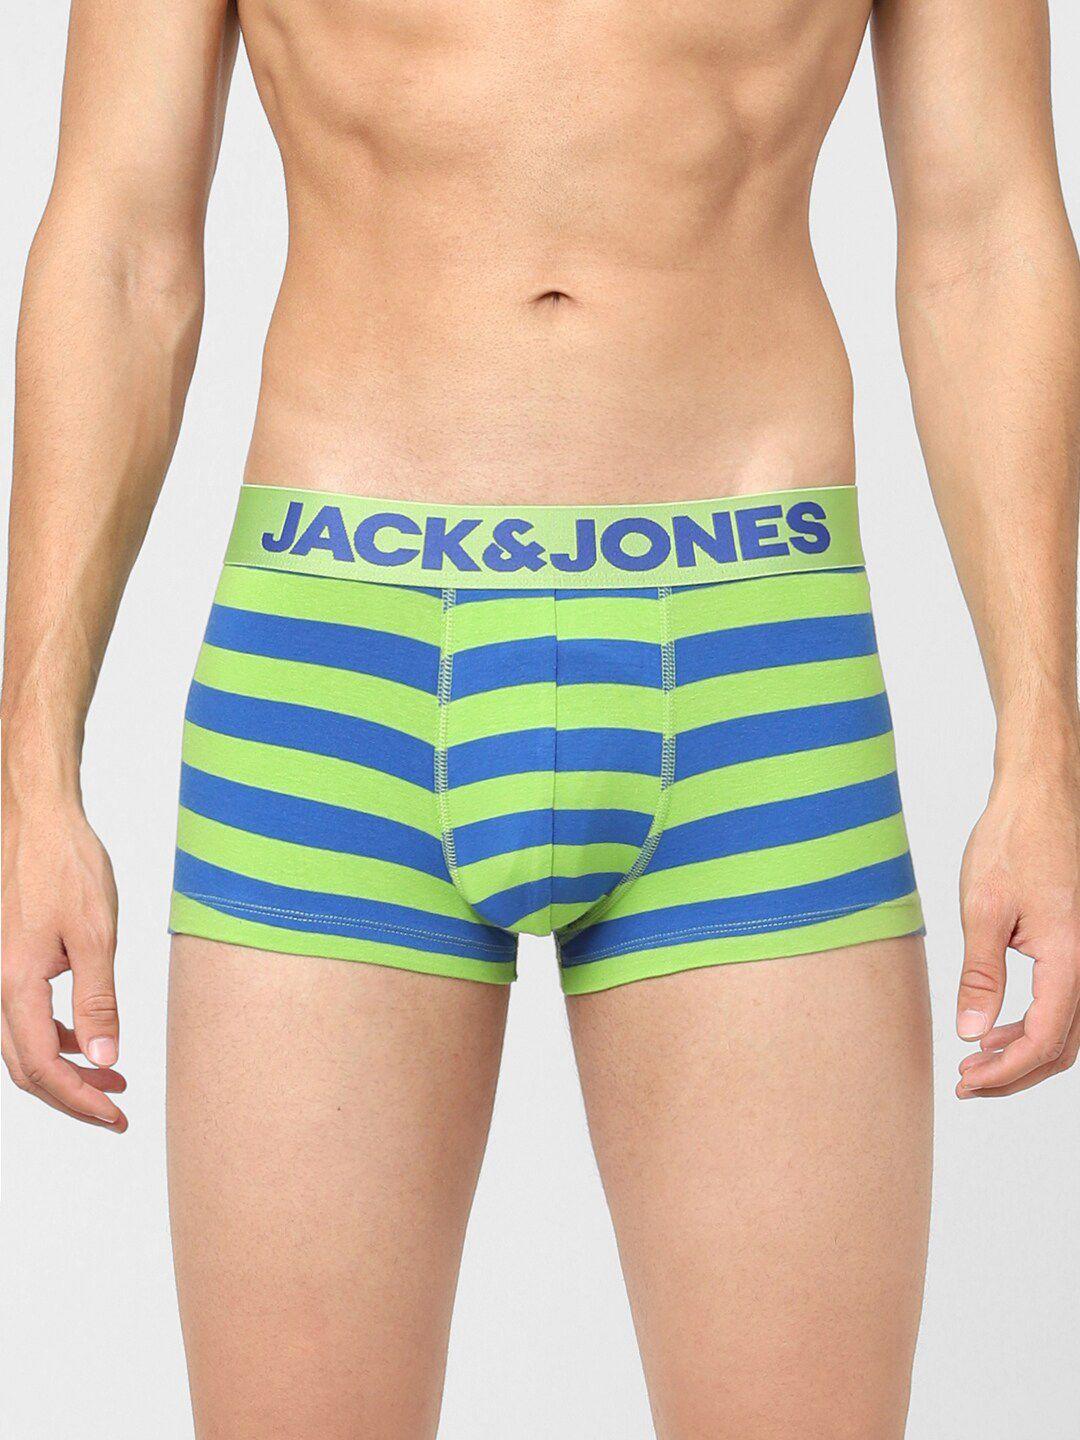 jack & jones men green & blue printed cotton trunk